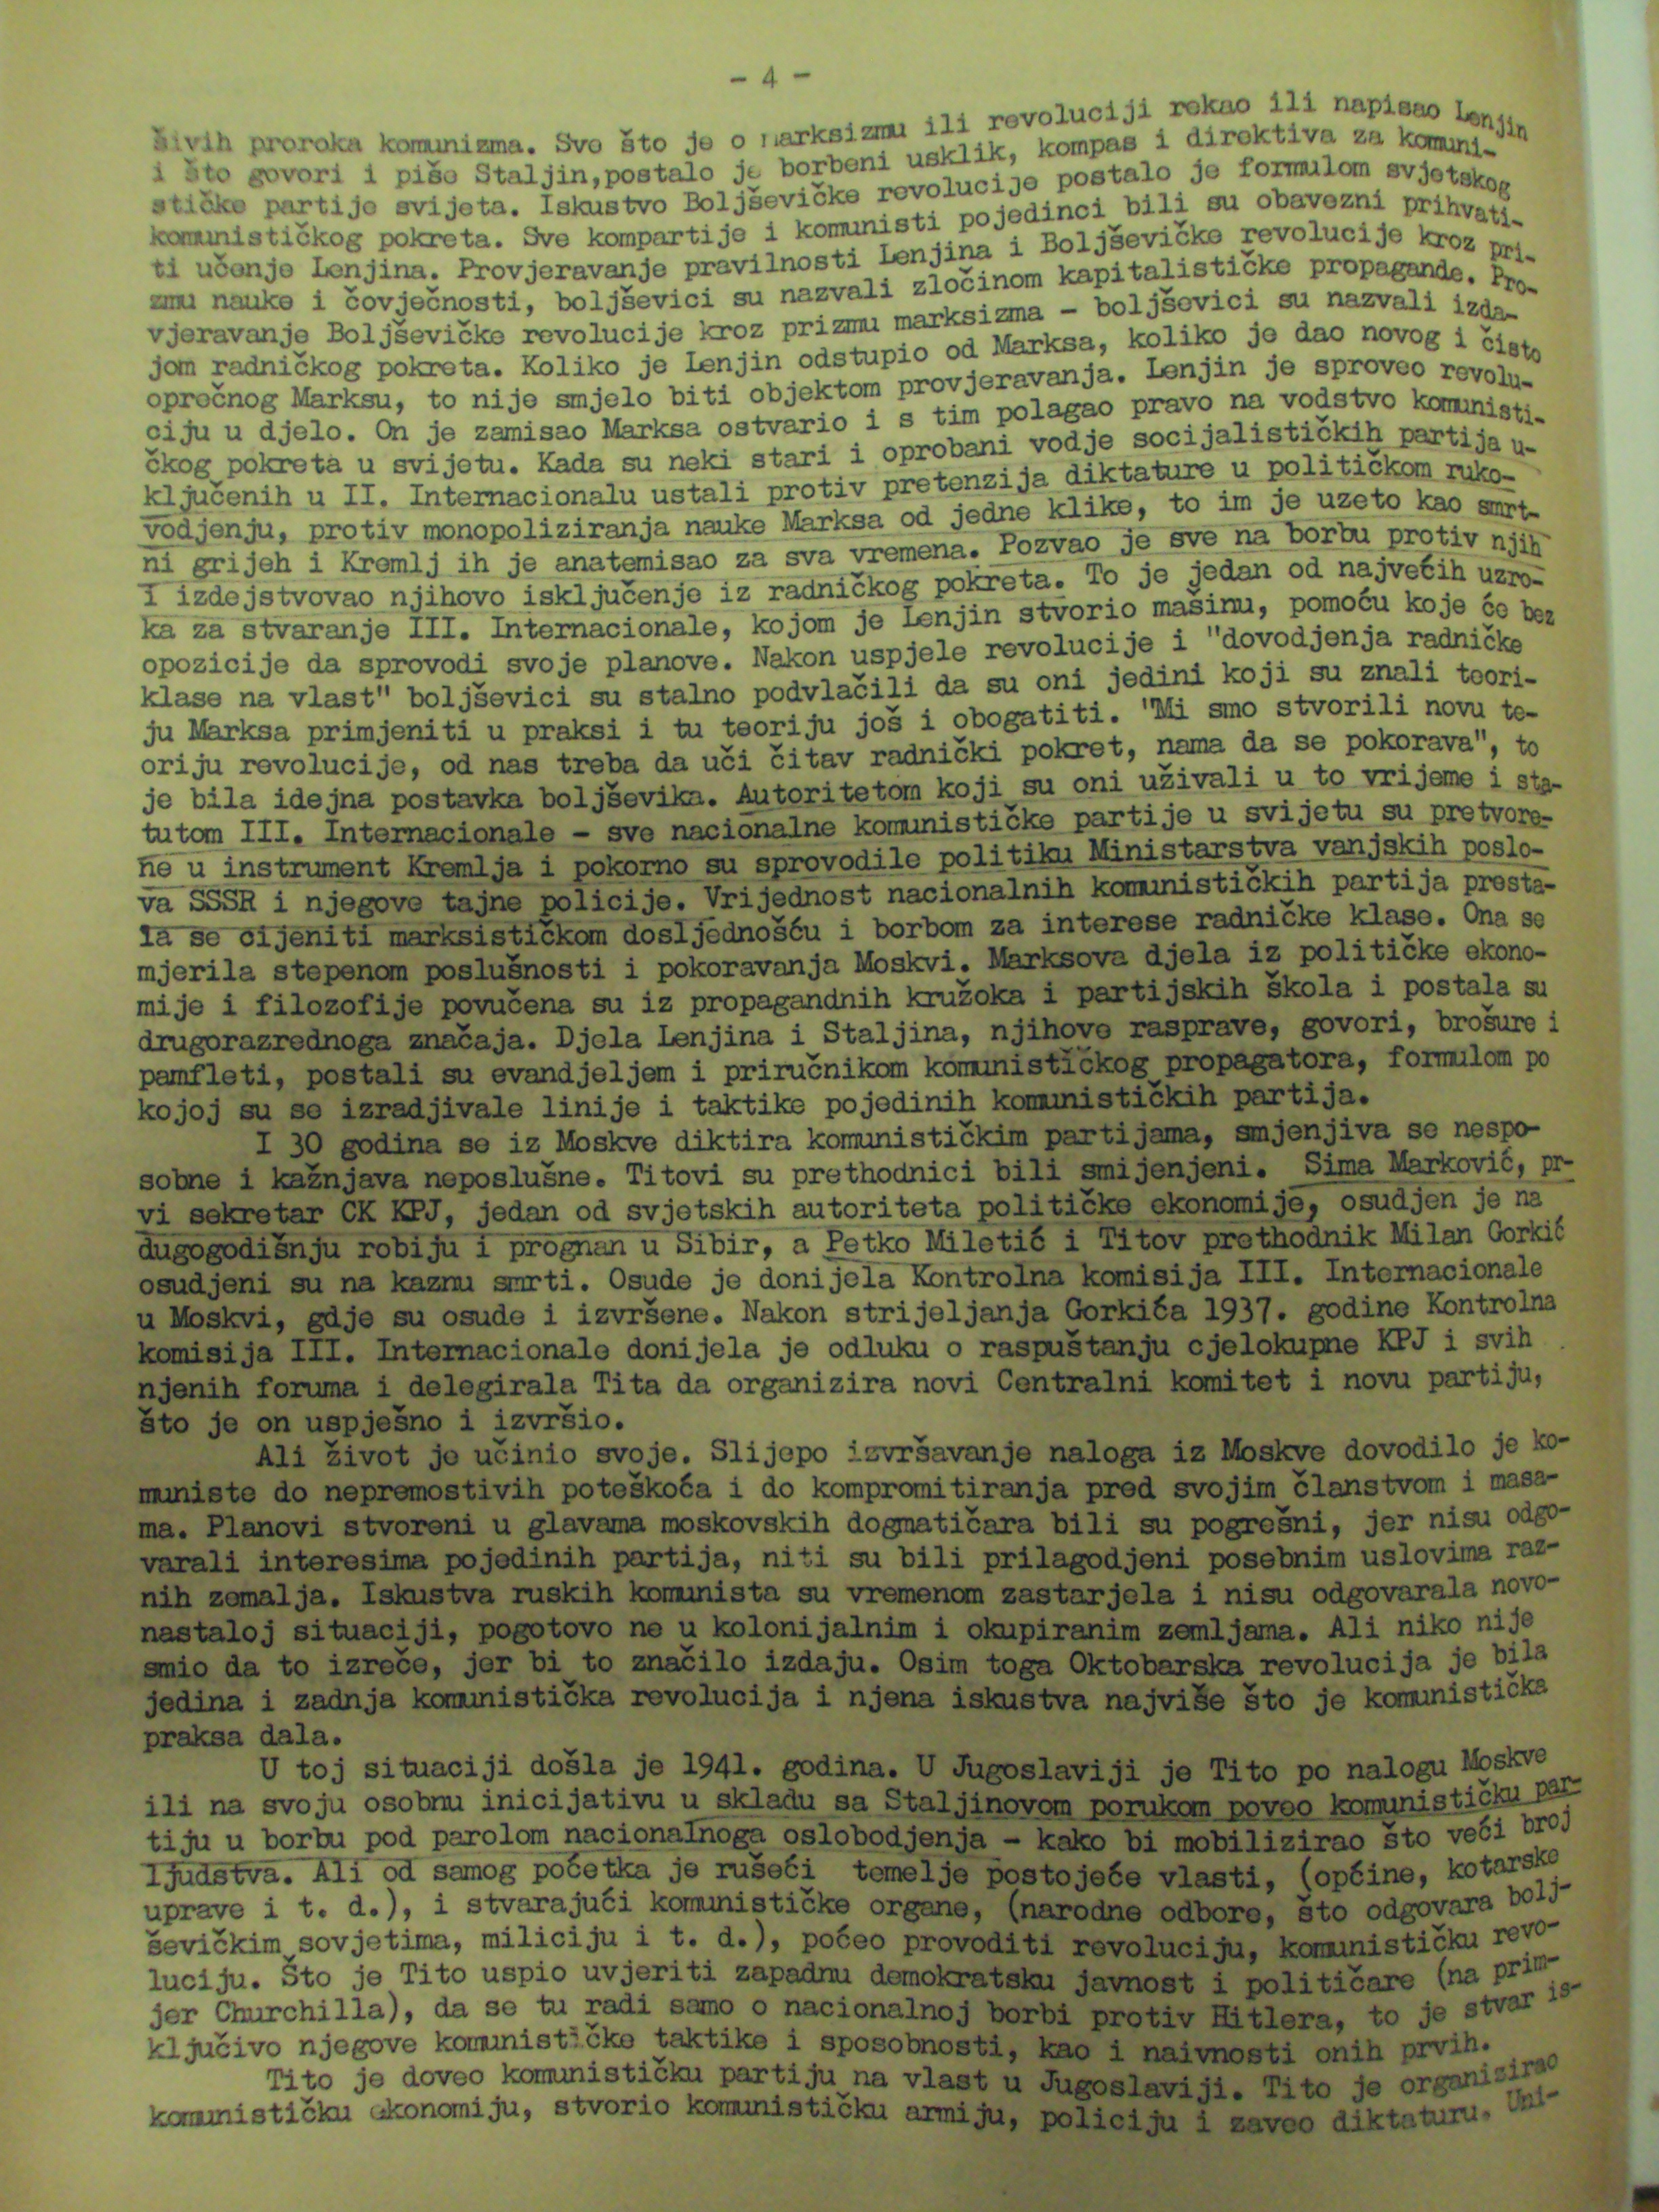 Juretić, Augustin. “Suština sukoba Kominform – Tito” [The essence of the Cominform conflict – Tito] (Hrvatski dom), 1950. Article 